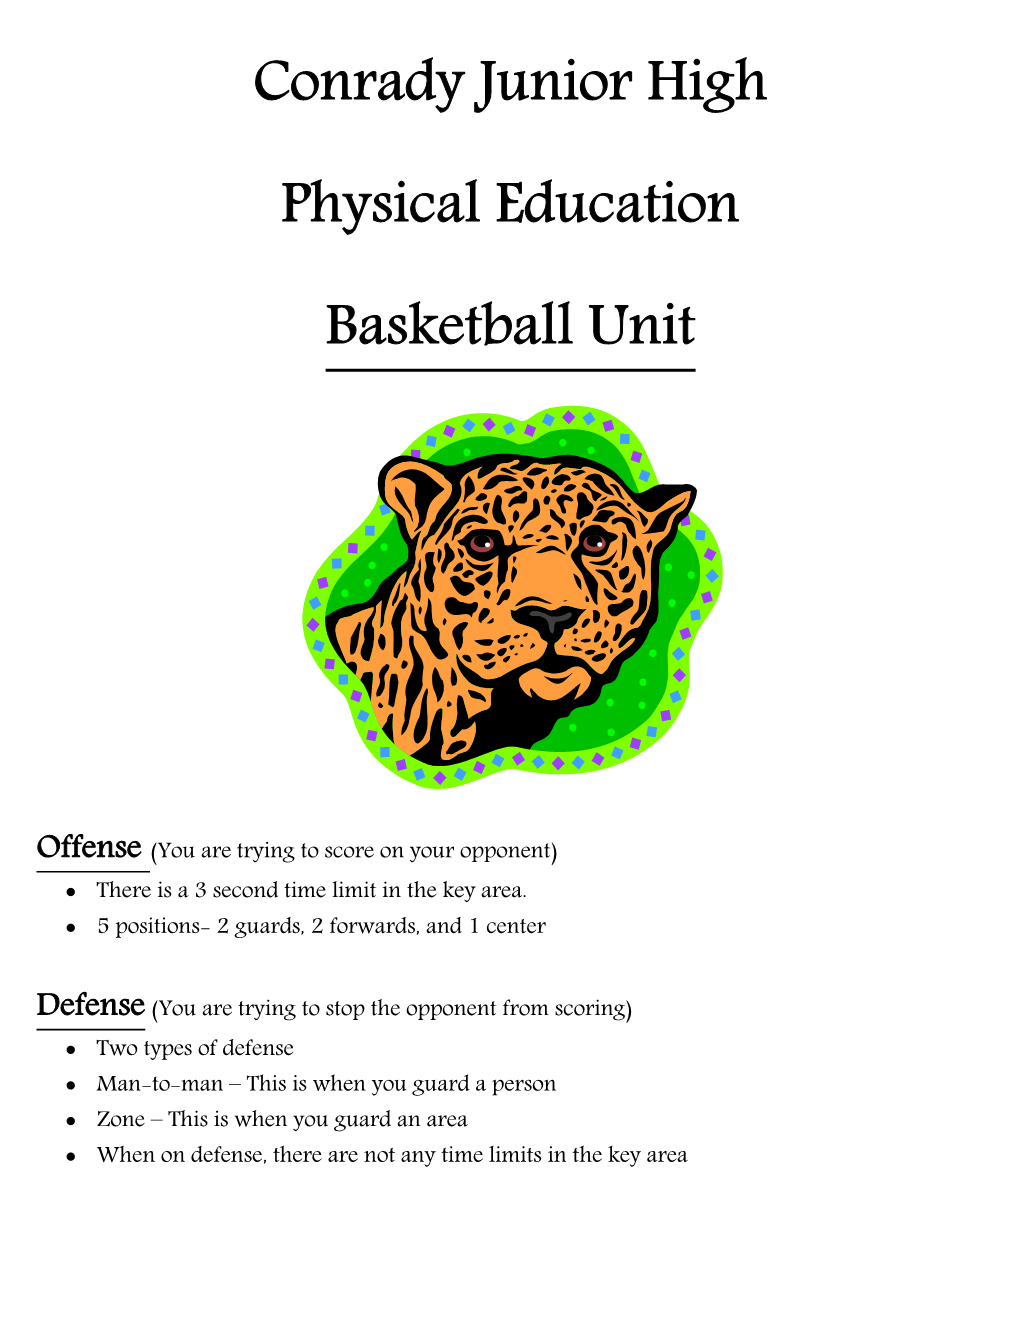 Conrady Junior High Physical Education Basketball Unit